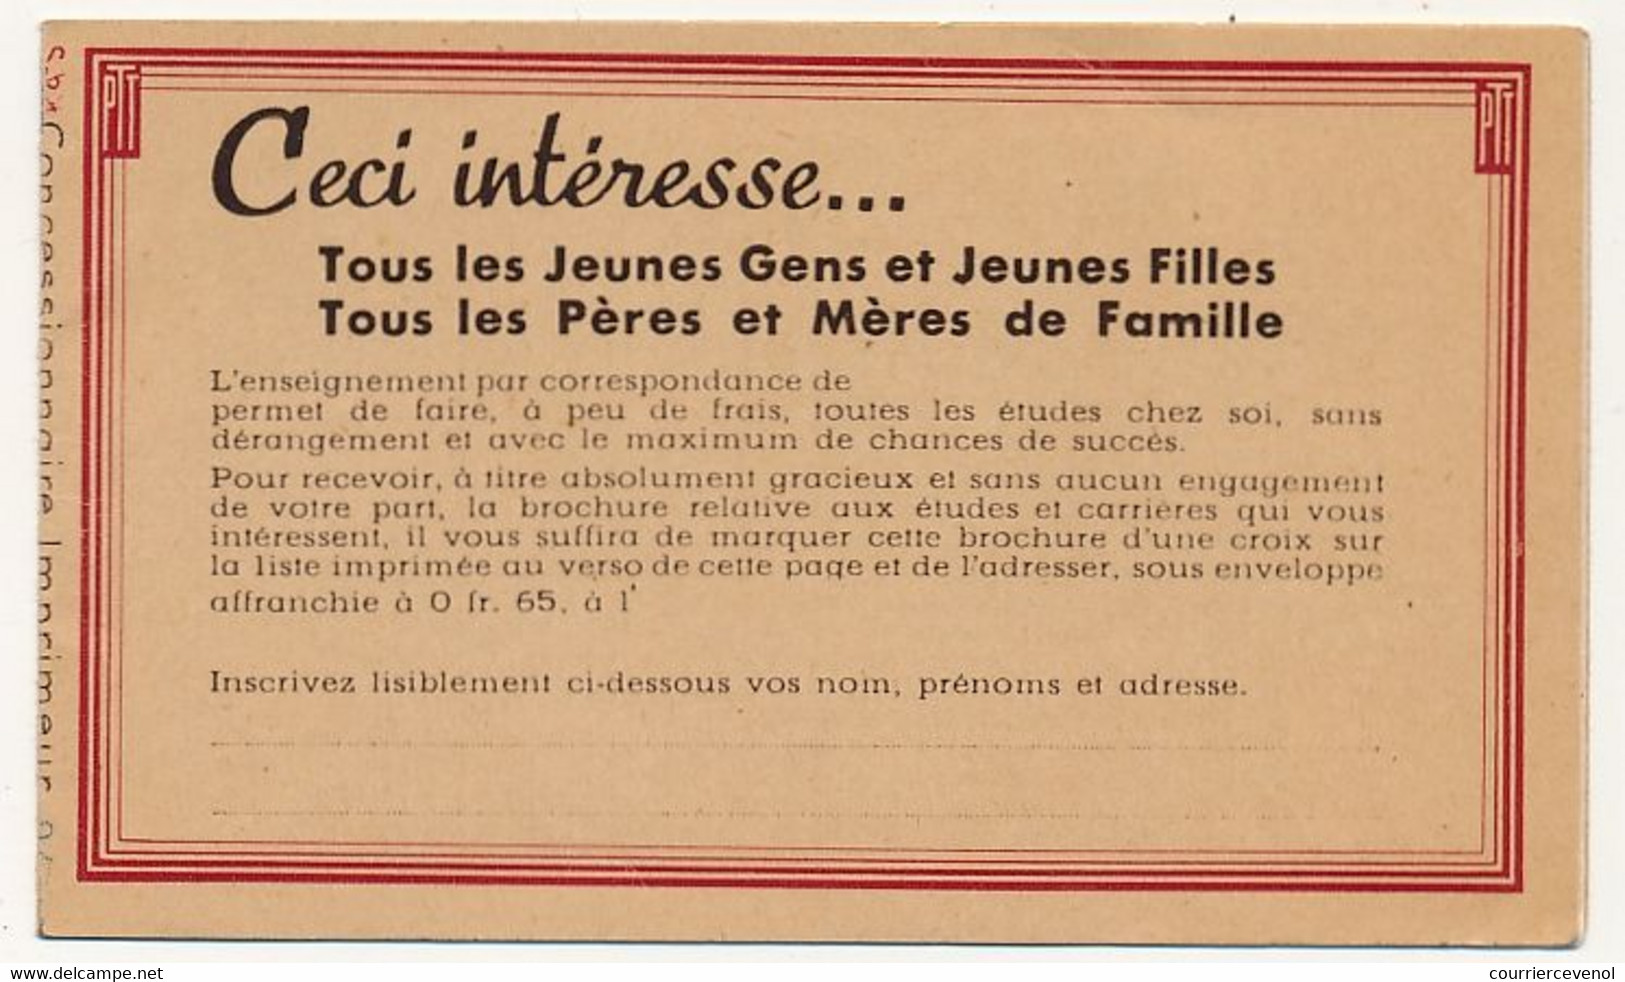 ALGÉRIE 1938 - Carnet C20** : 65c Bleu - Fraissinet-Byrrh-Byrrh-Torpedo - Unused Stamps